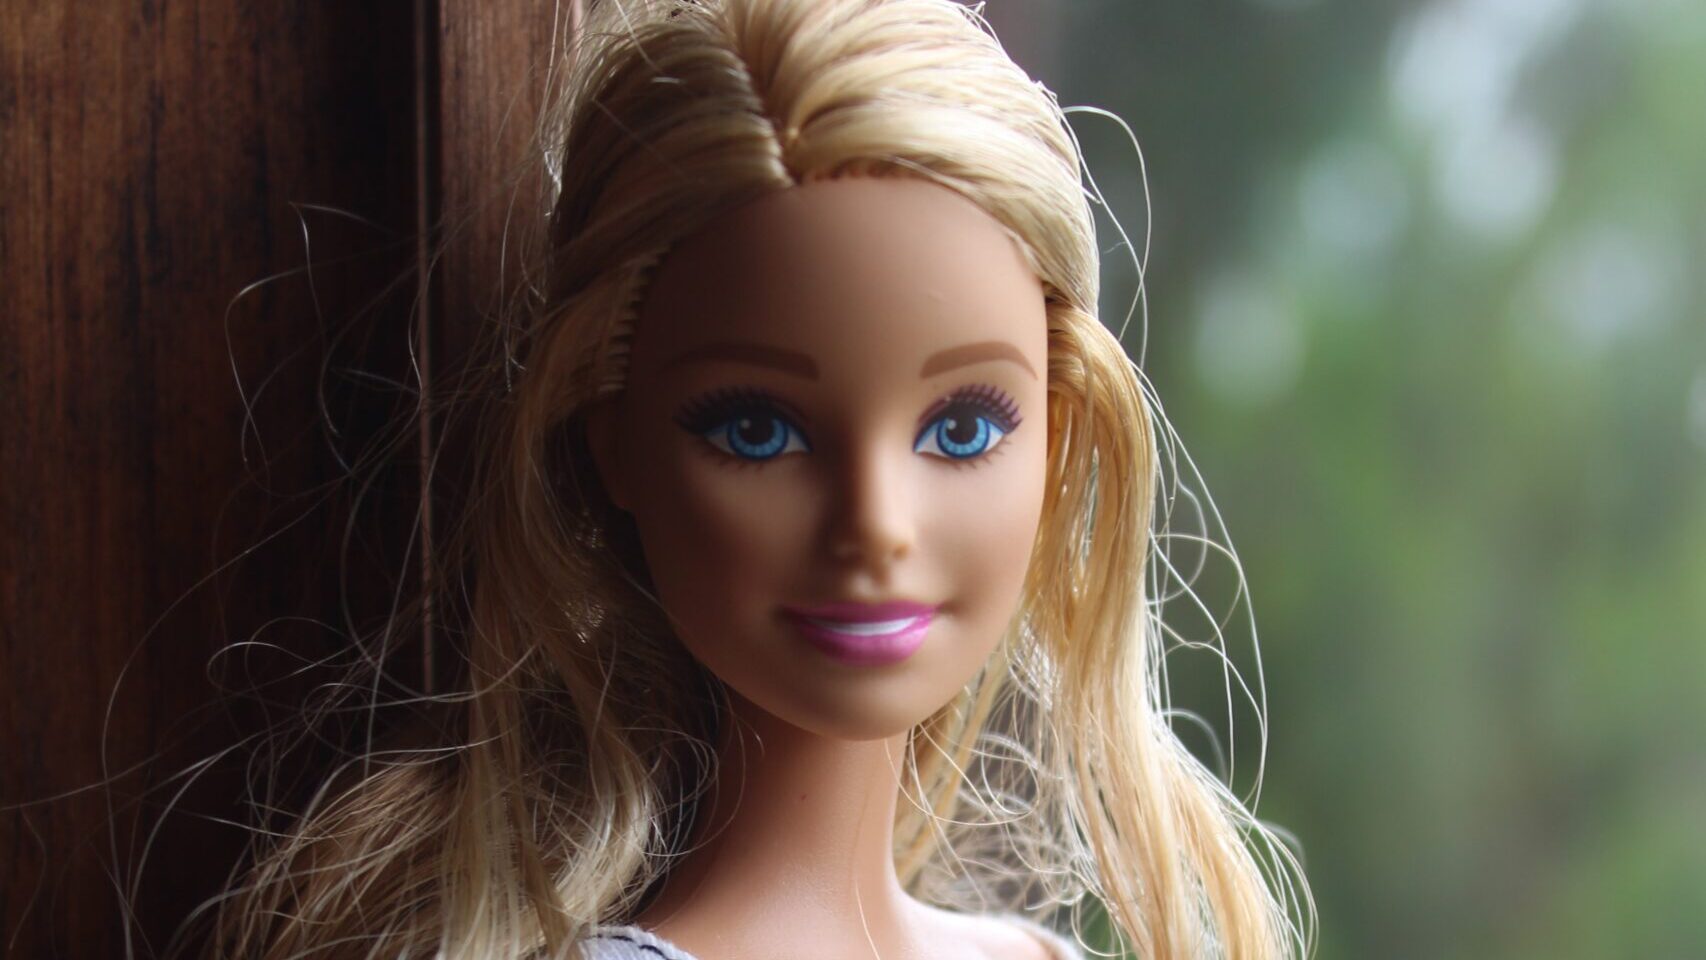 Genuine Disney Mattel Barbie Doll - Blonde Hair Blue Eyes No Clothes  **READ**